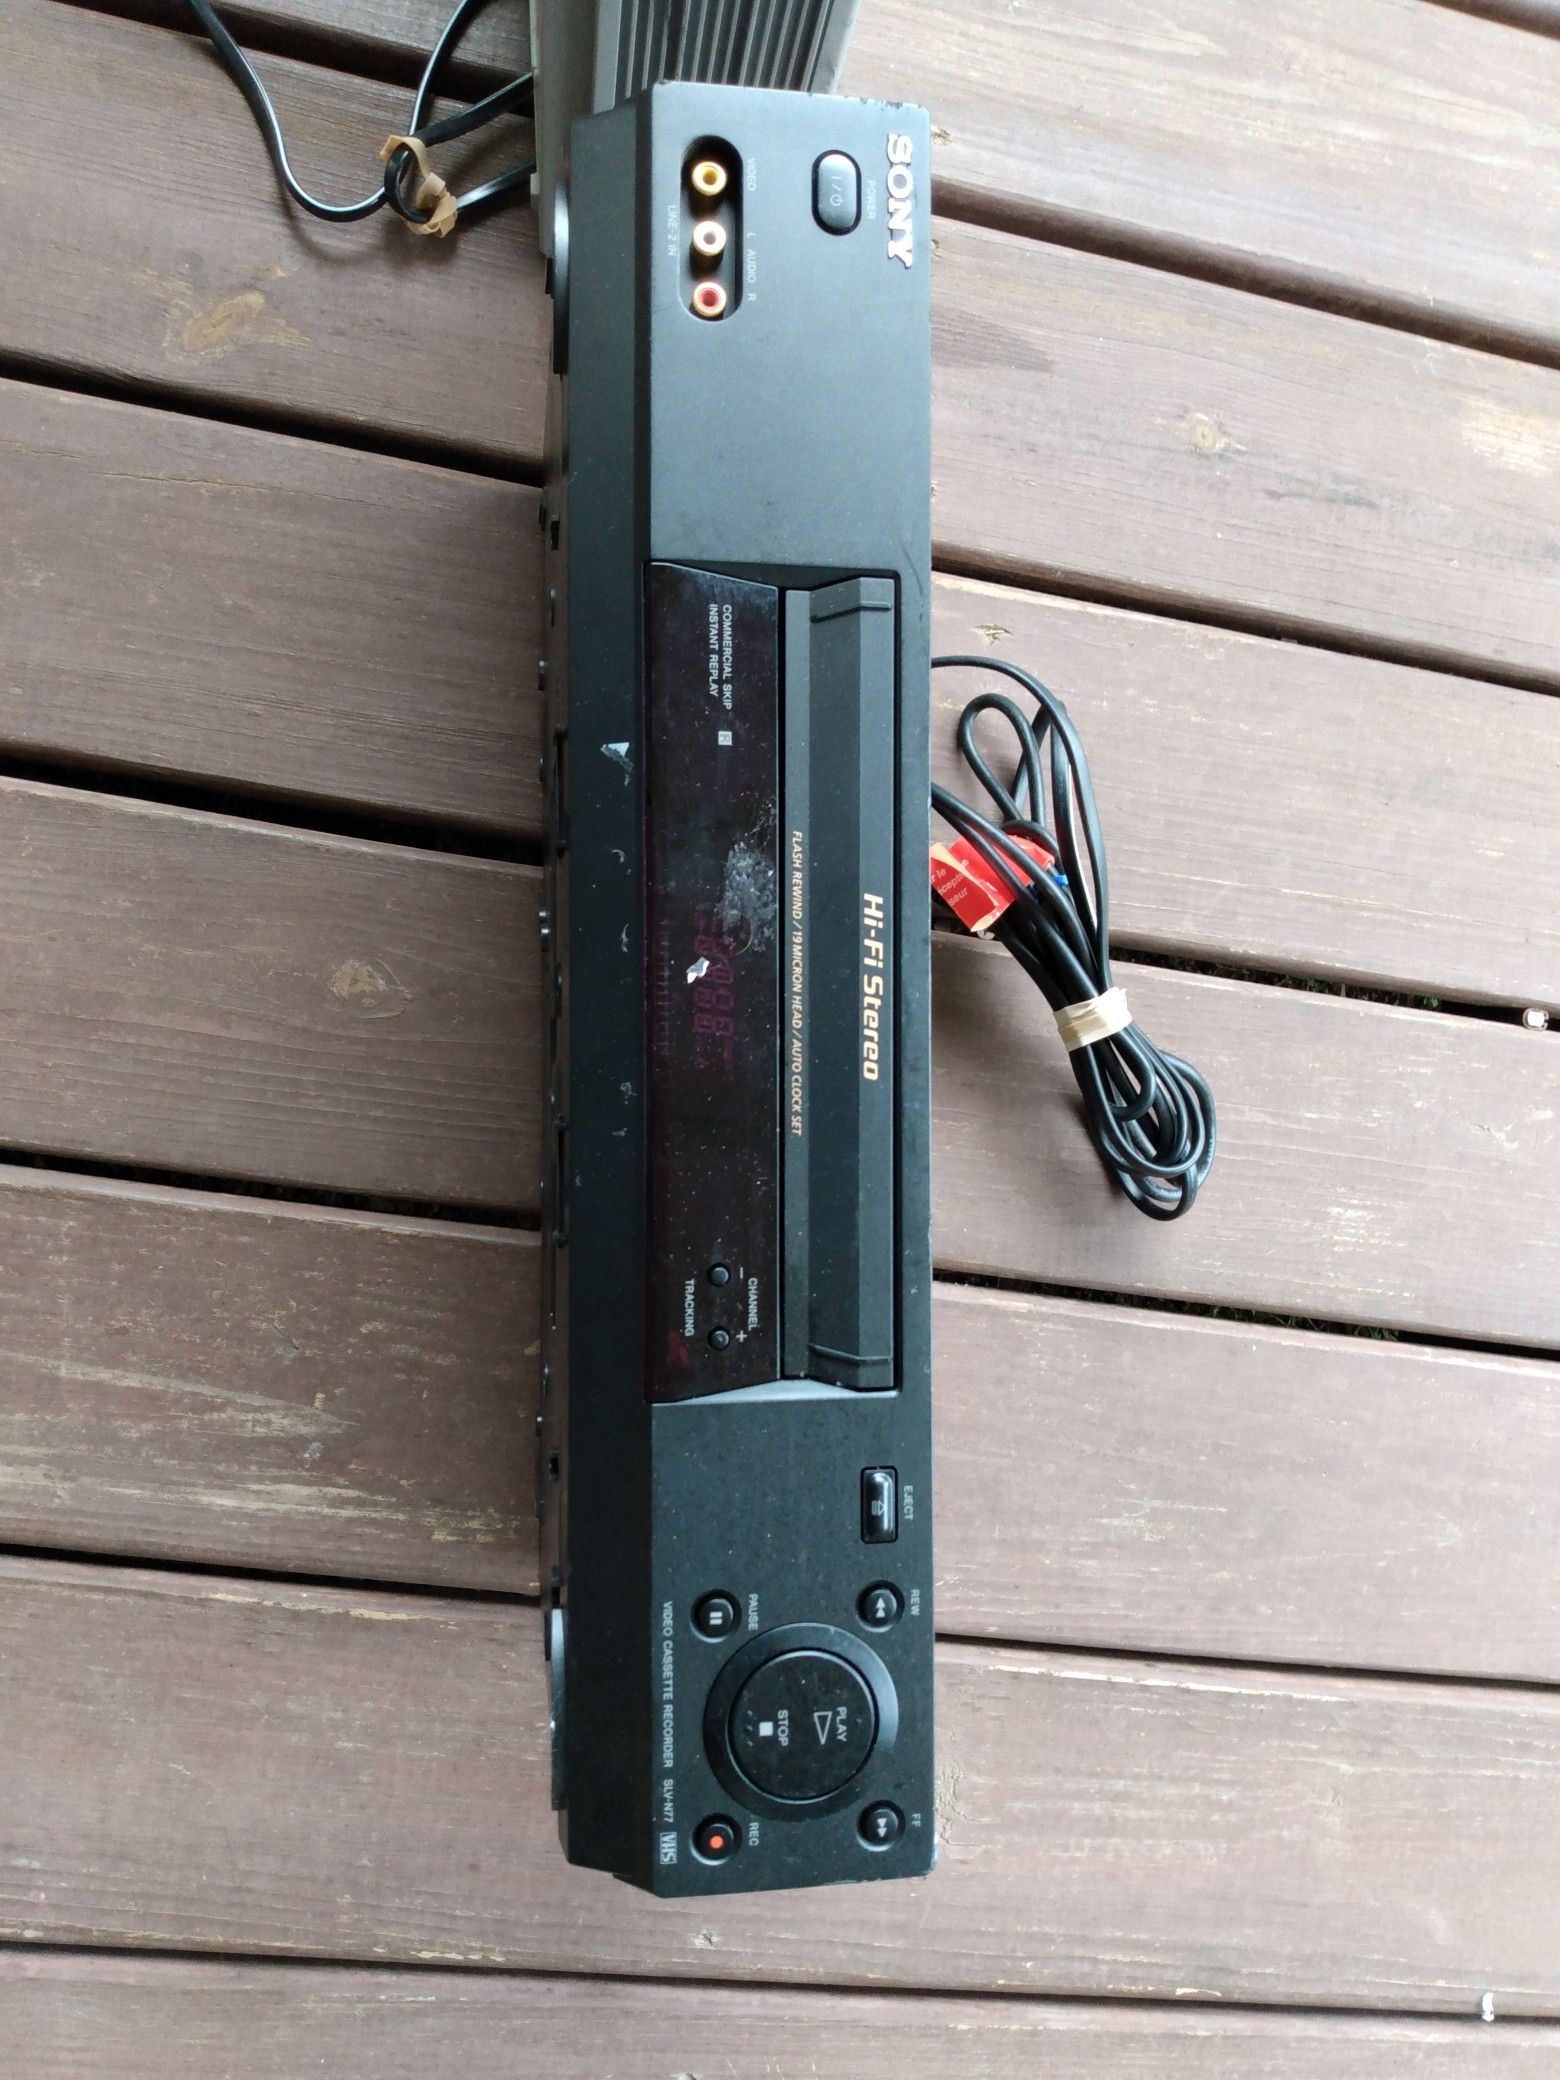 Sony vcr black VHS player